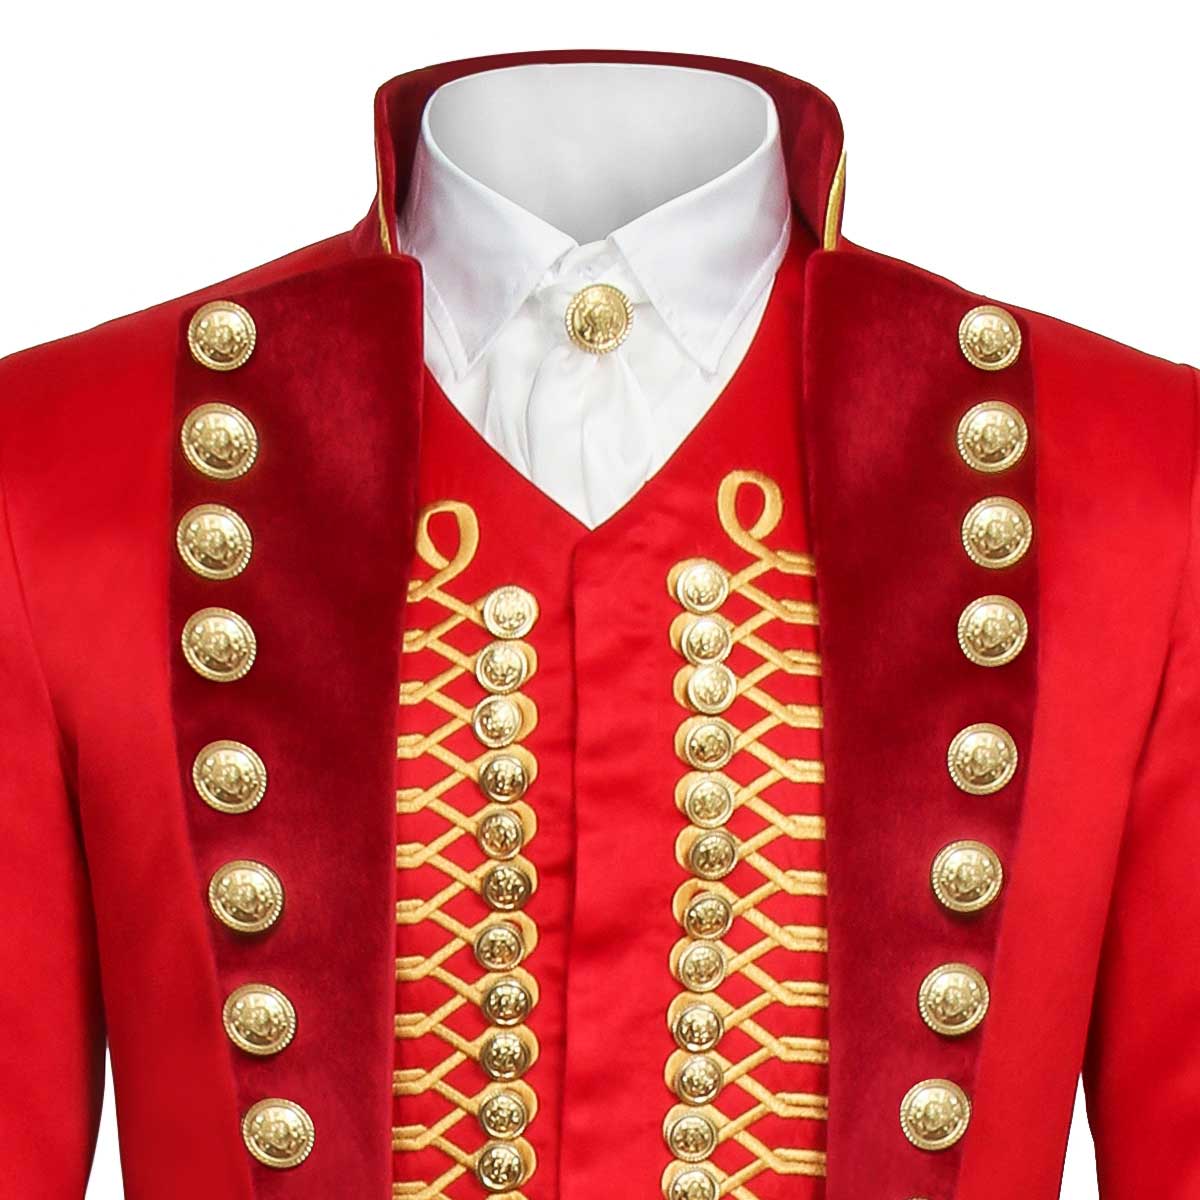 The Greatest Showman P. T. Barnum Full Set Customized Uniforms Cosplay Costume